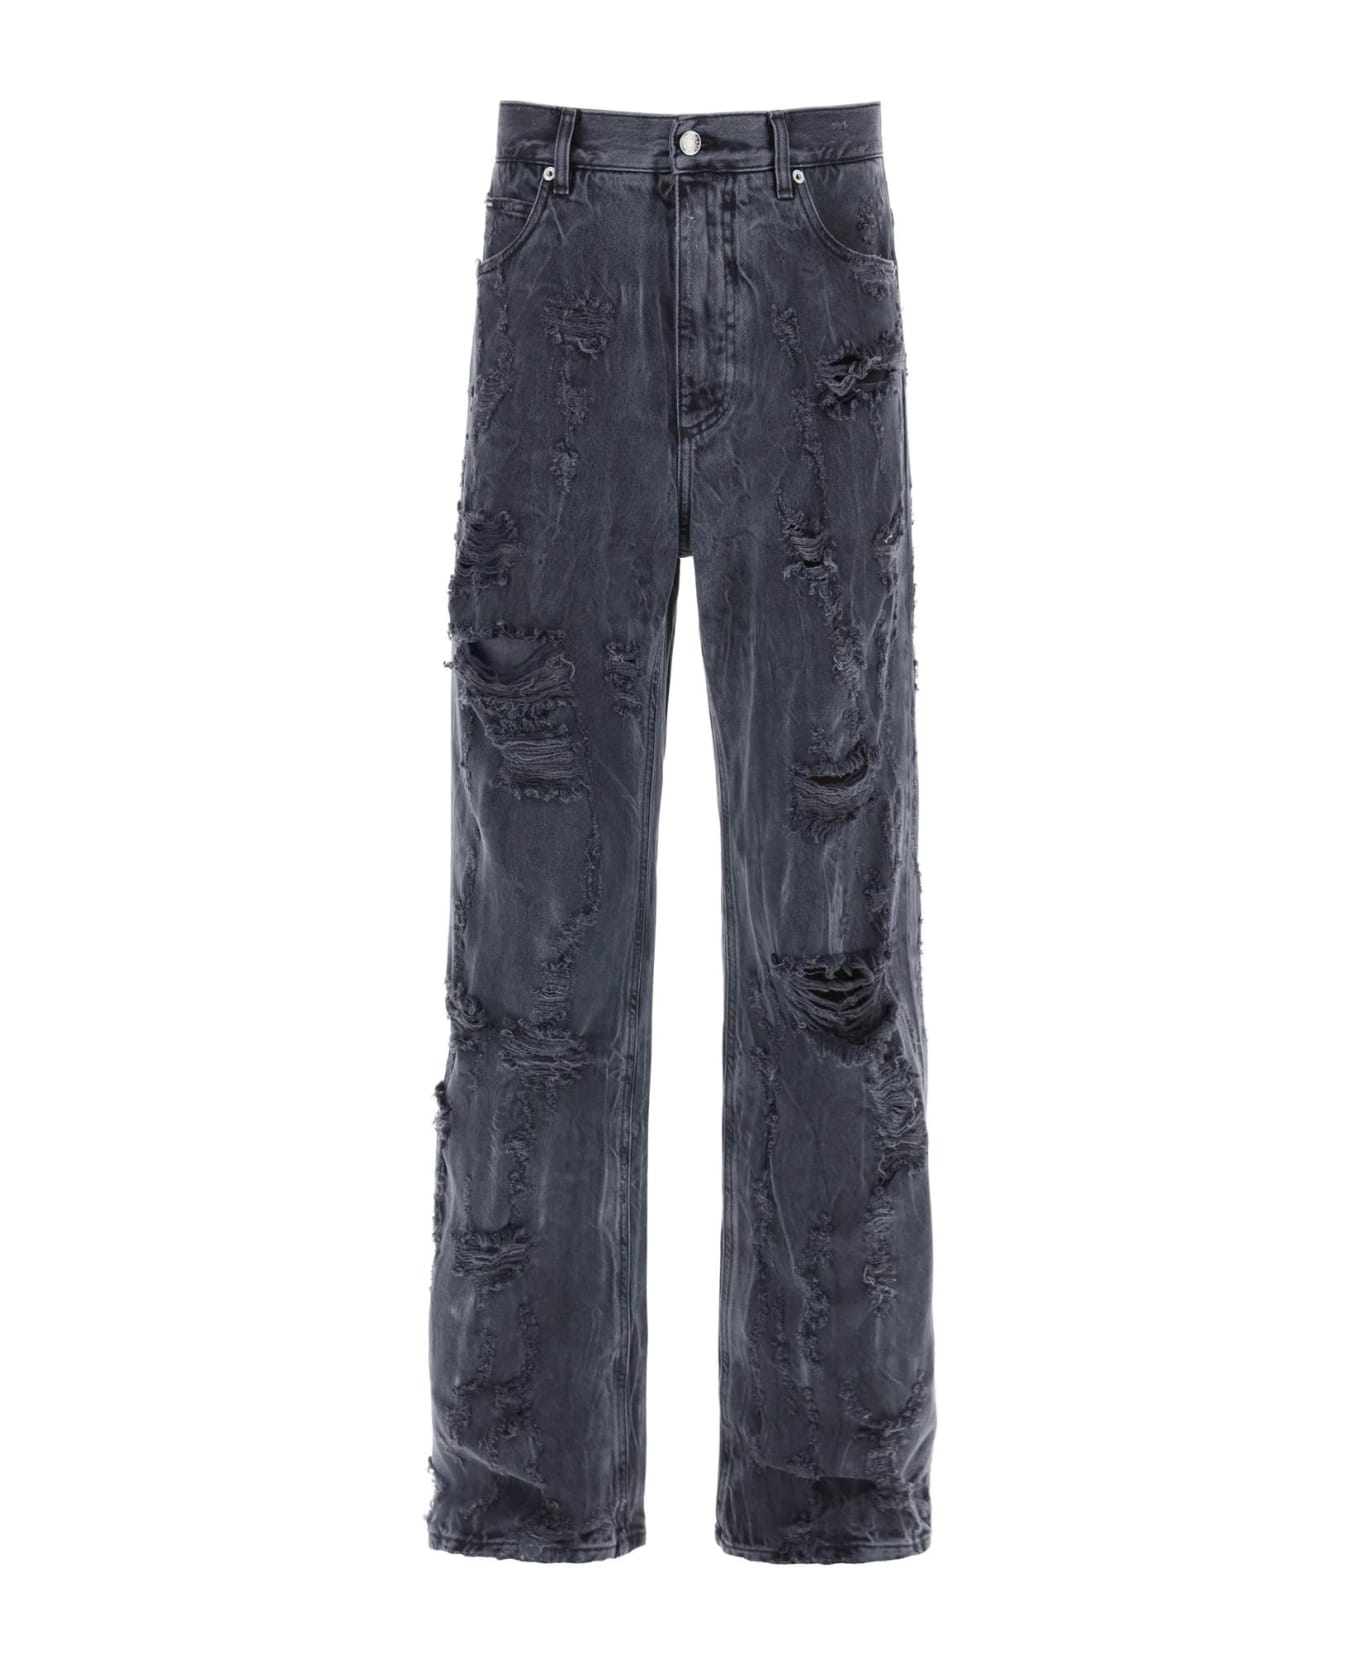 Dolce & Gabbana Destroyed-effect Jeans - VARIANTE ABBINATA (Grey)